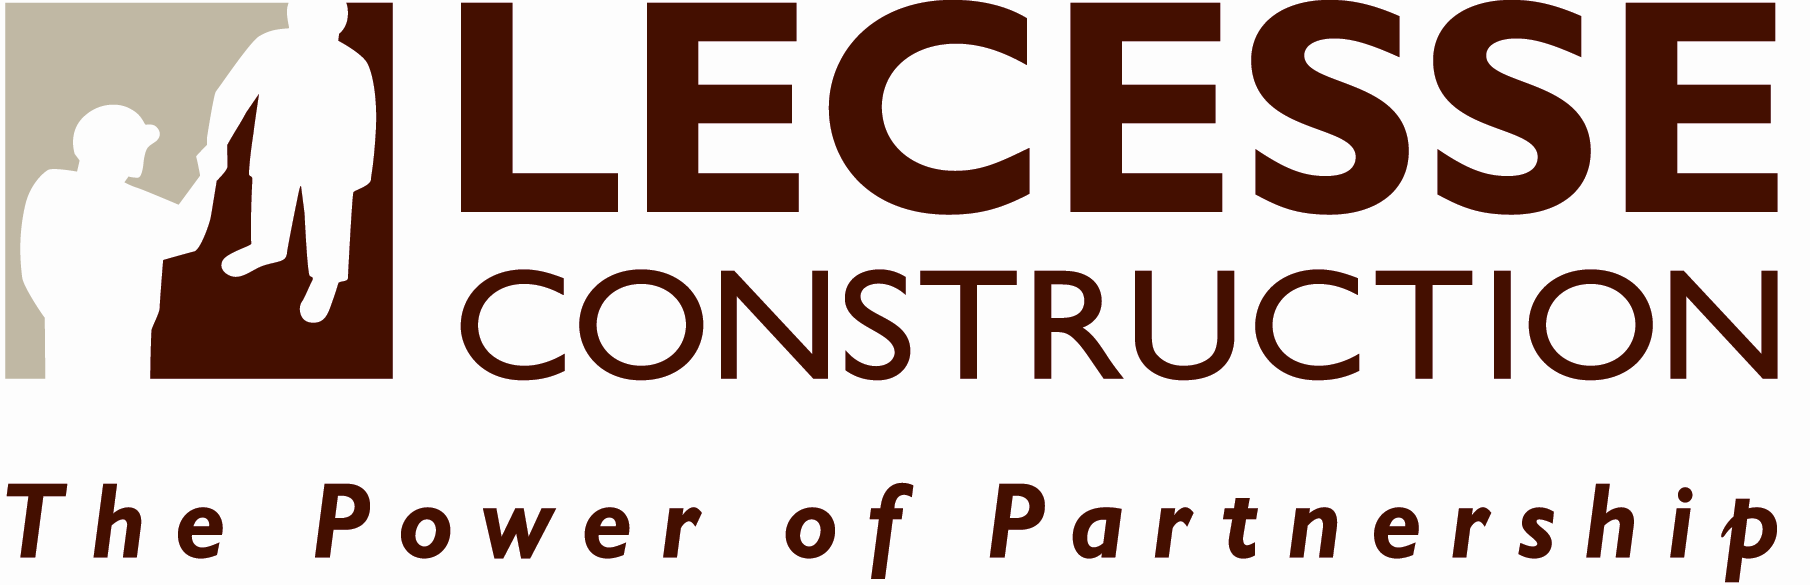 LECESSE Construction Services, LLC  company logo